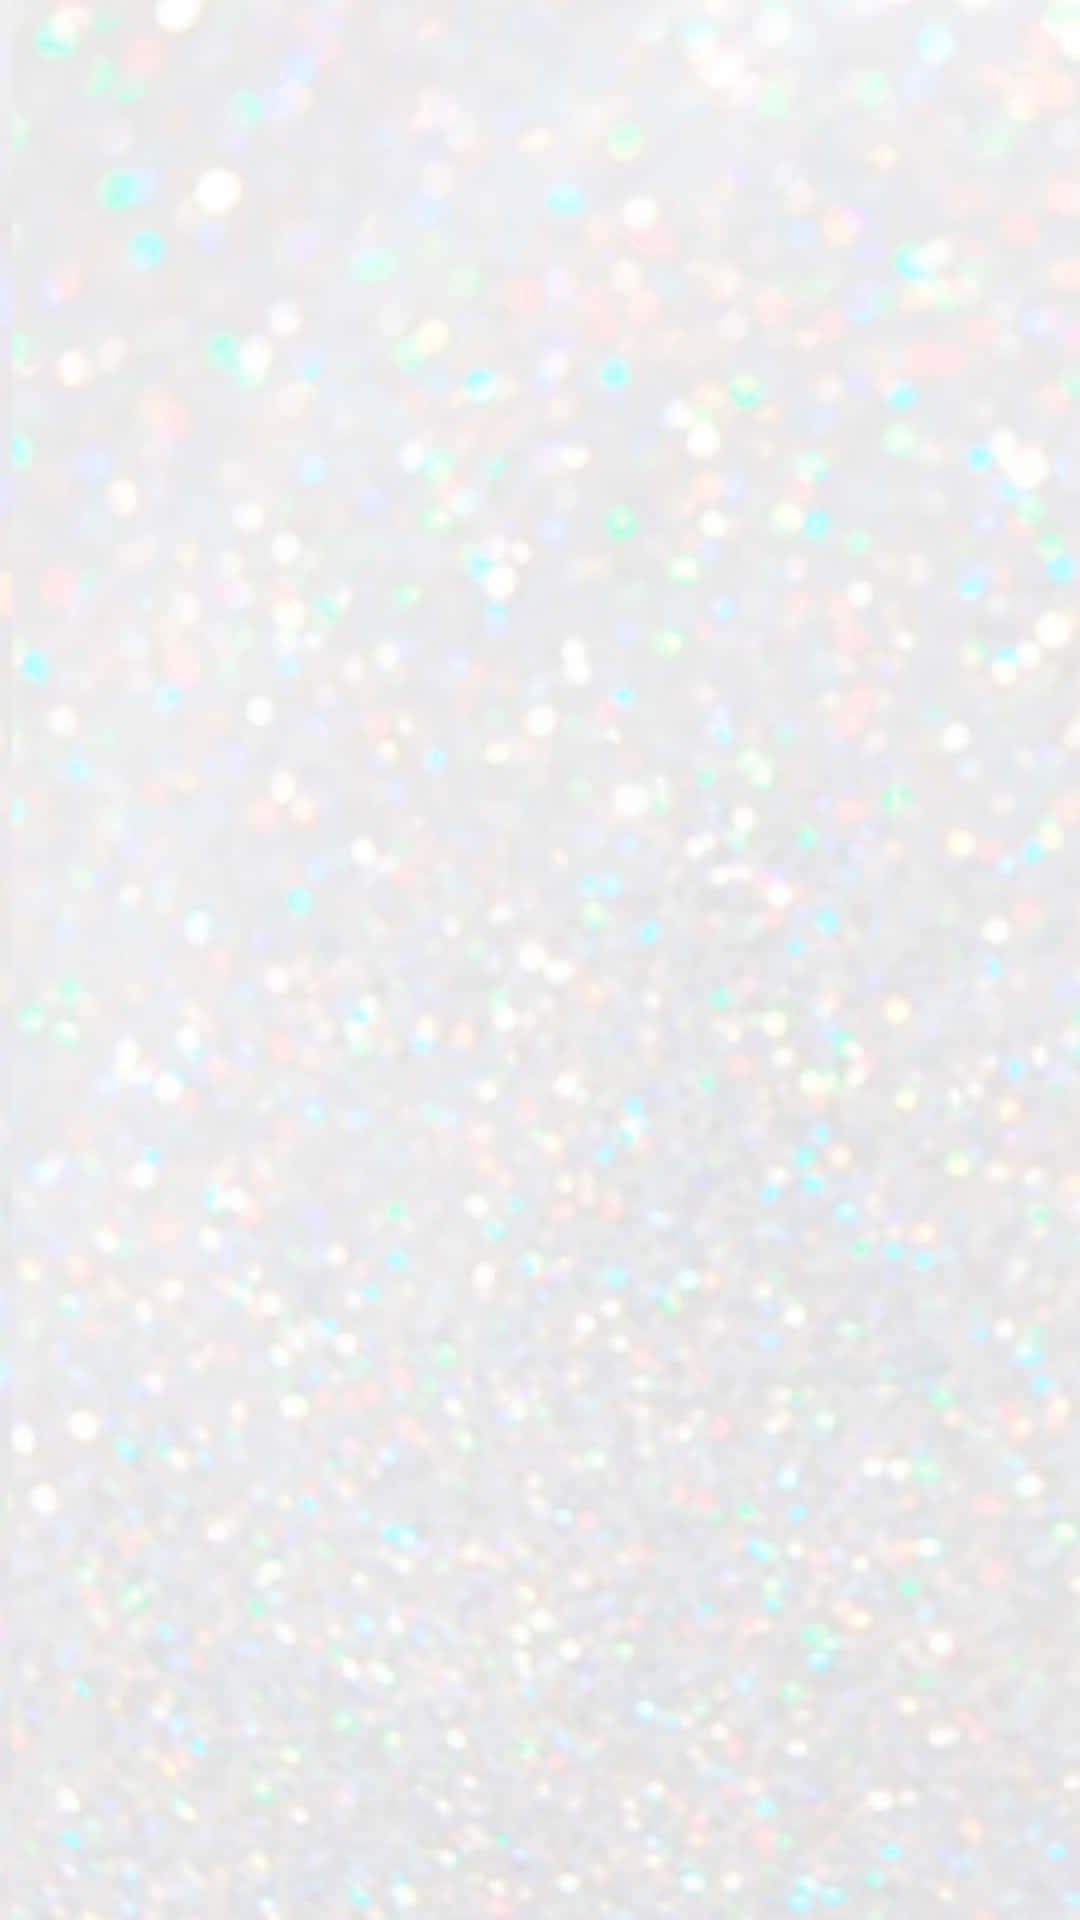 sparkly white background